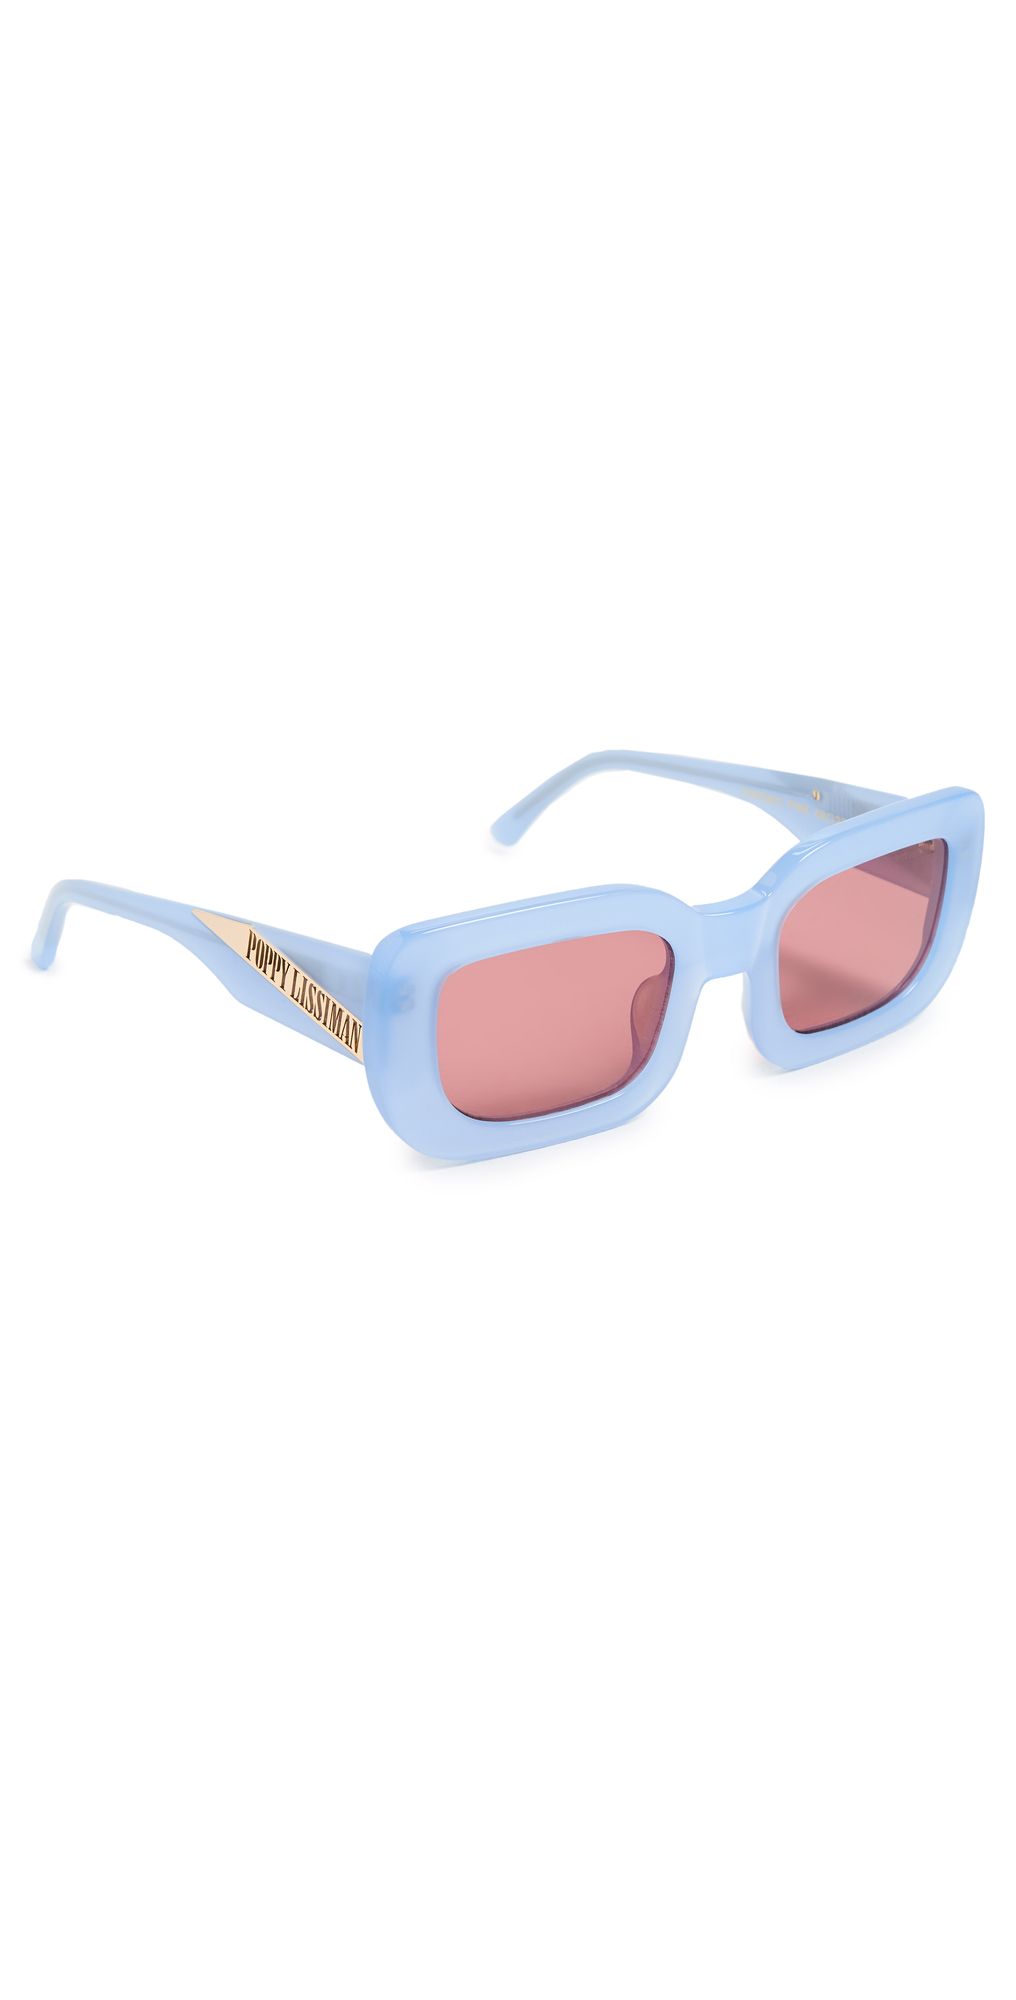 Chesko Sunglasses | Shopbop